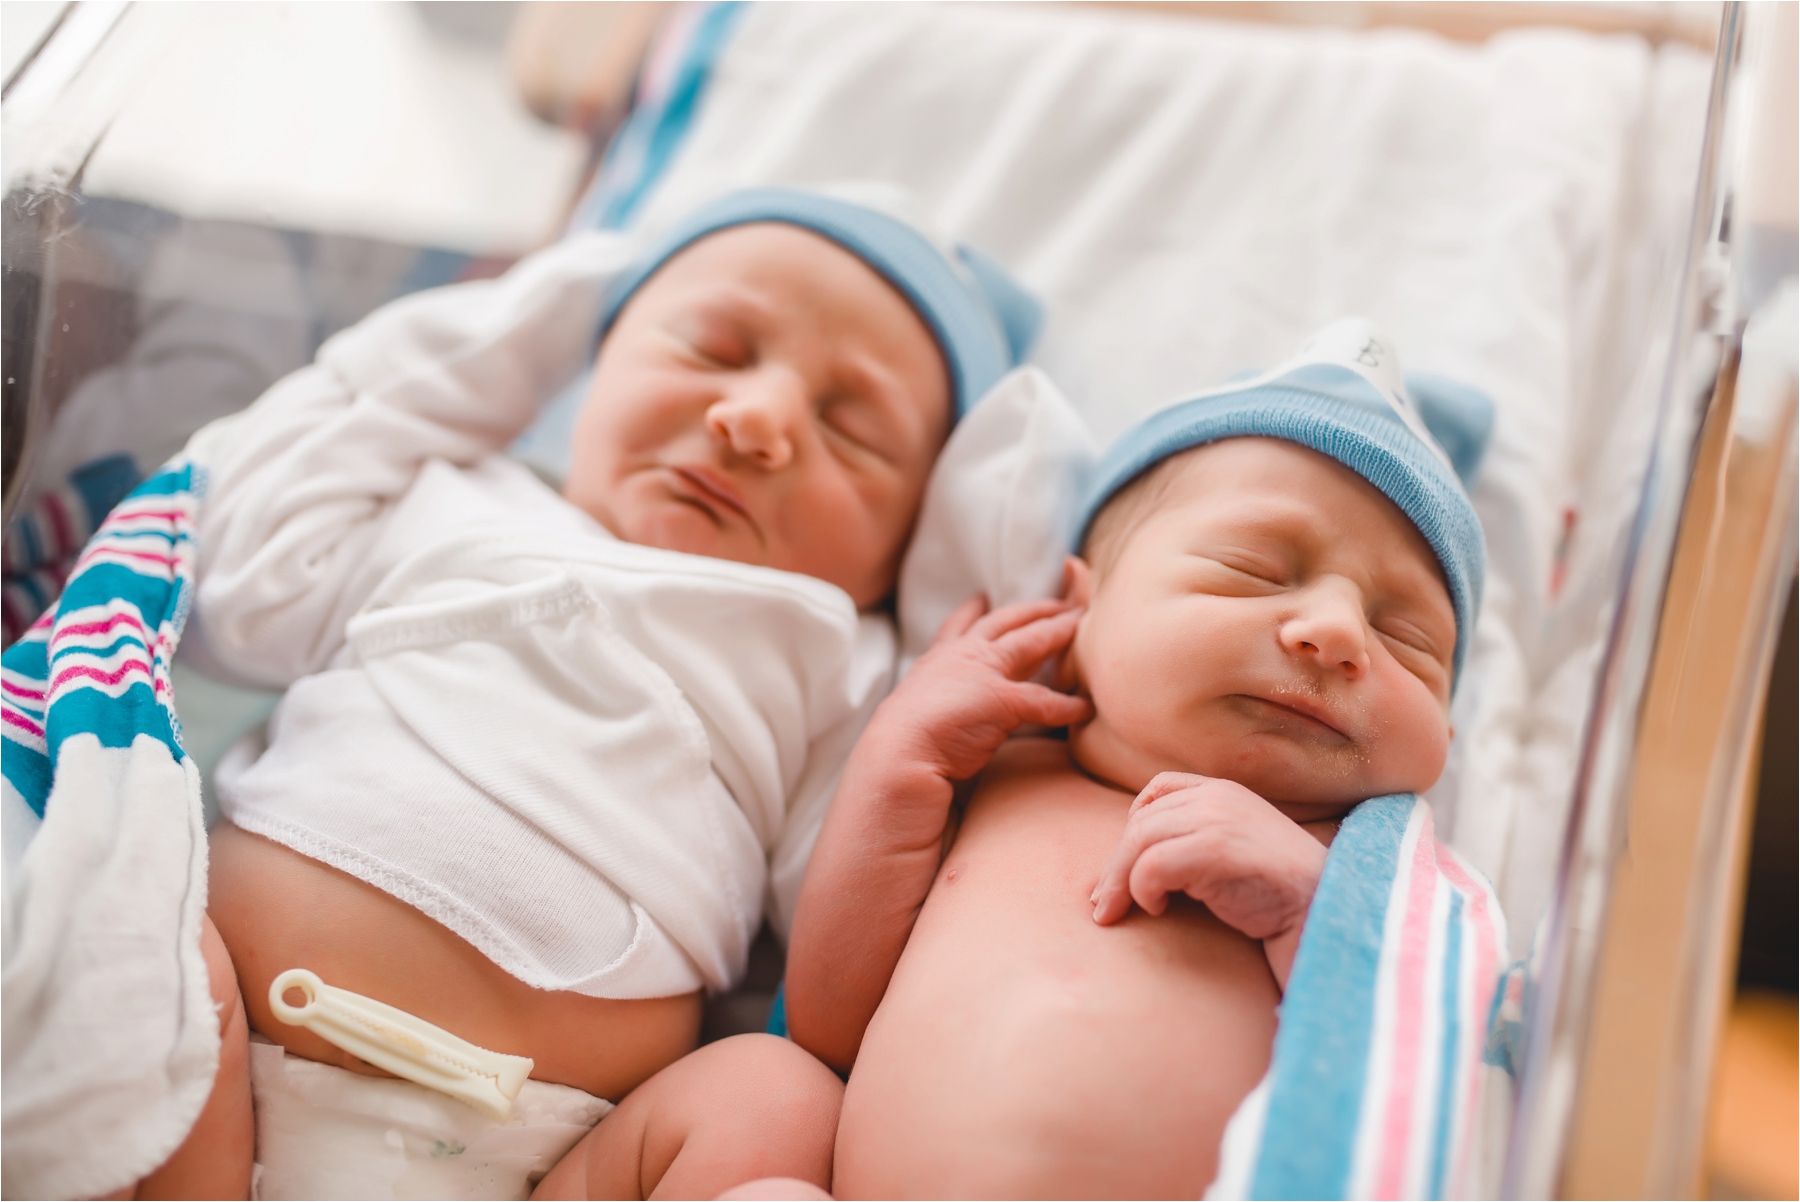 newborn baby twin boys in hospital